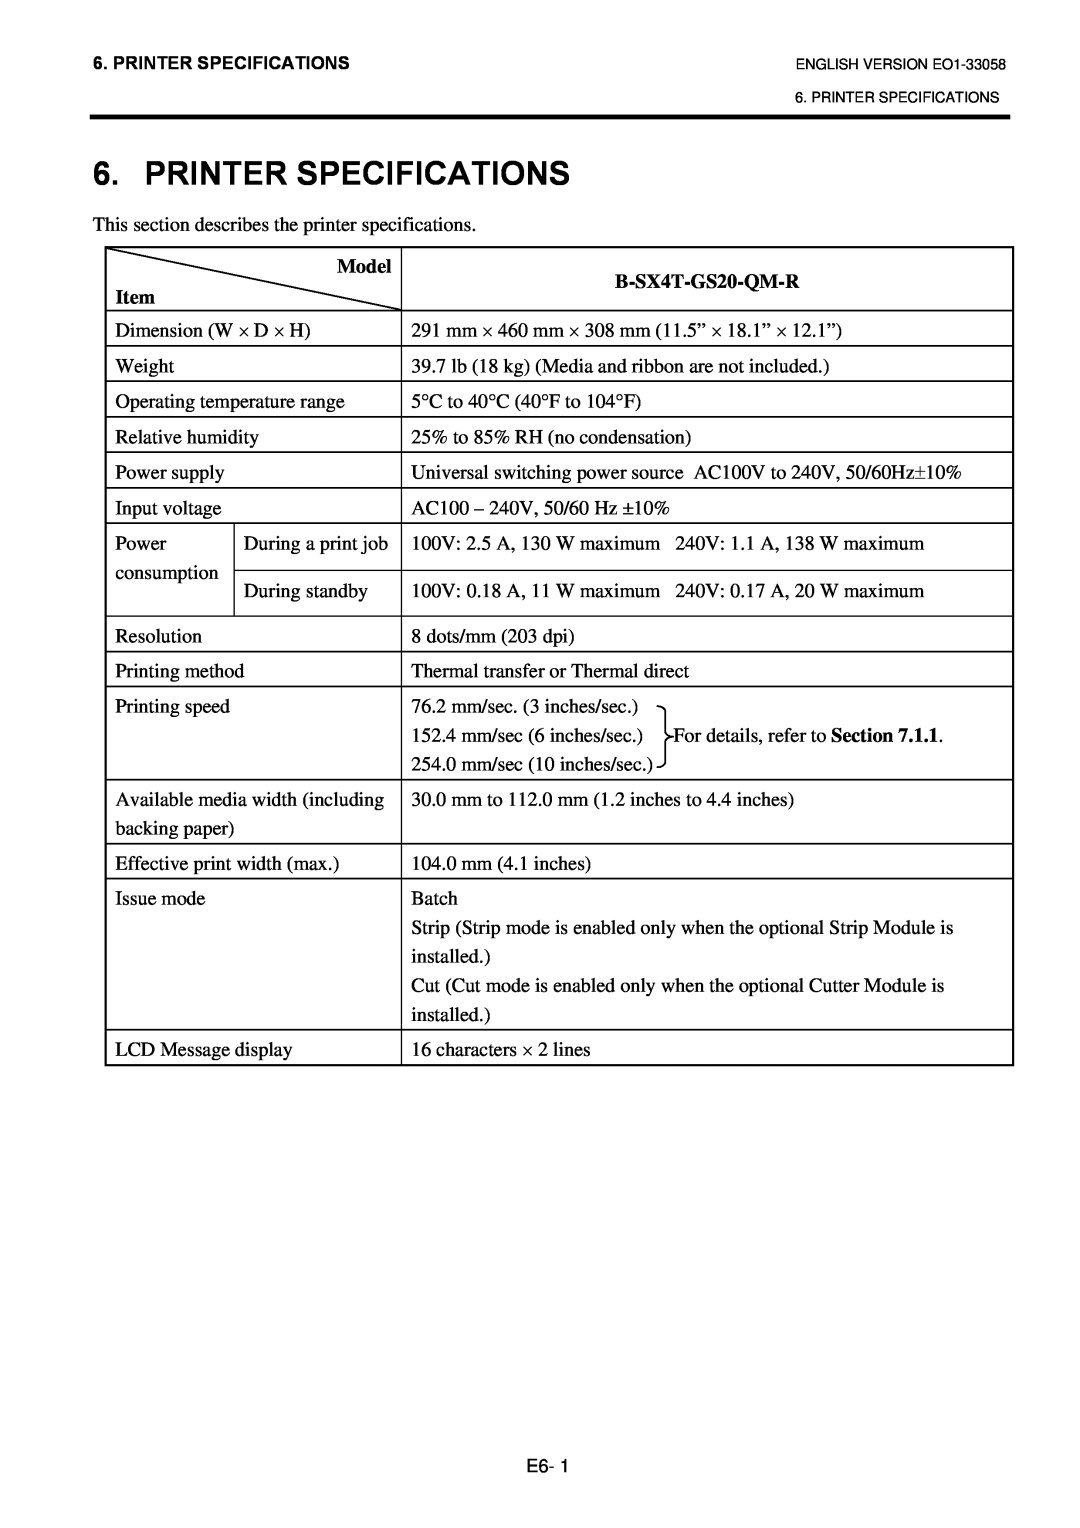 Toshiba owner manual Printer Specifications, Model, B-SX4T-GS20-QM-R 